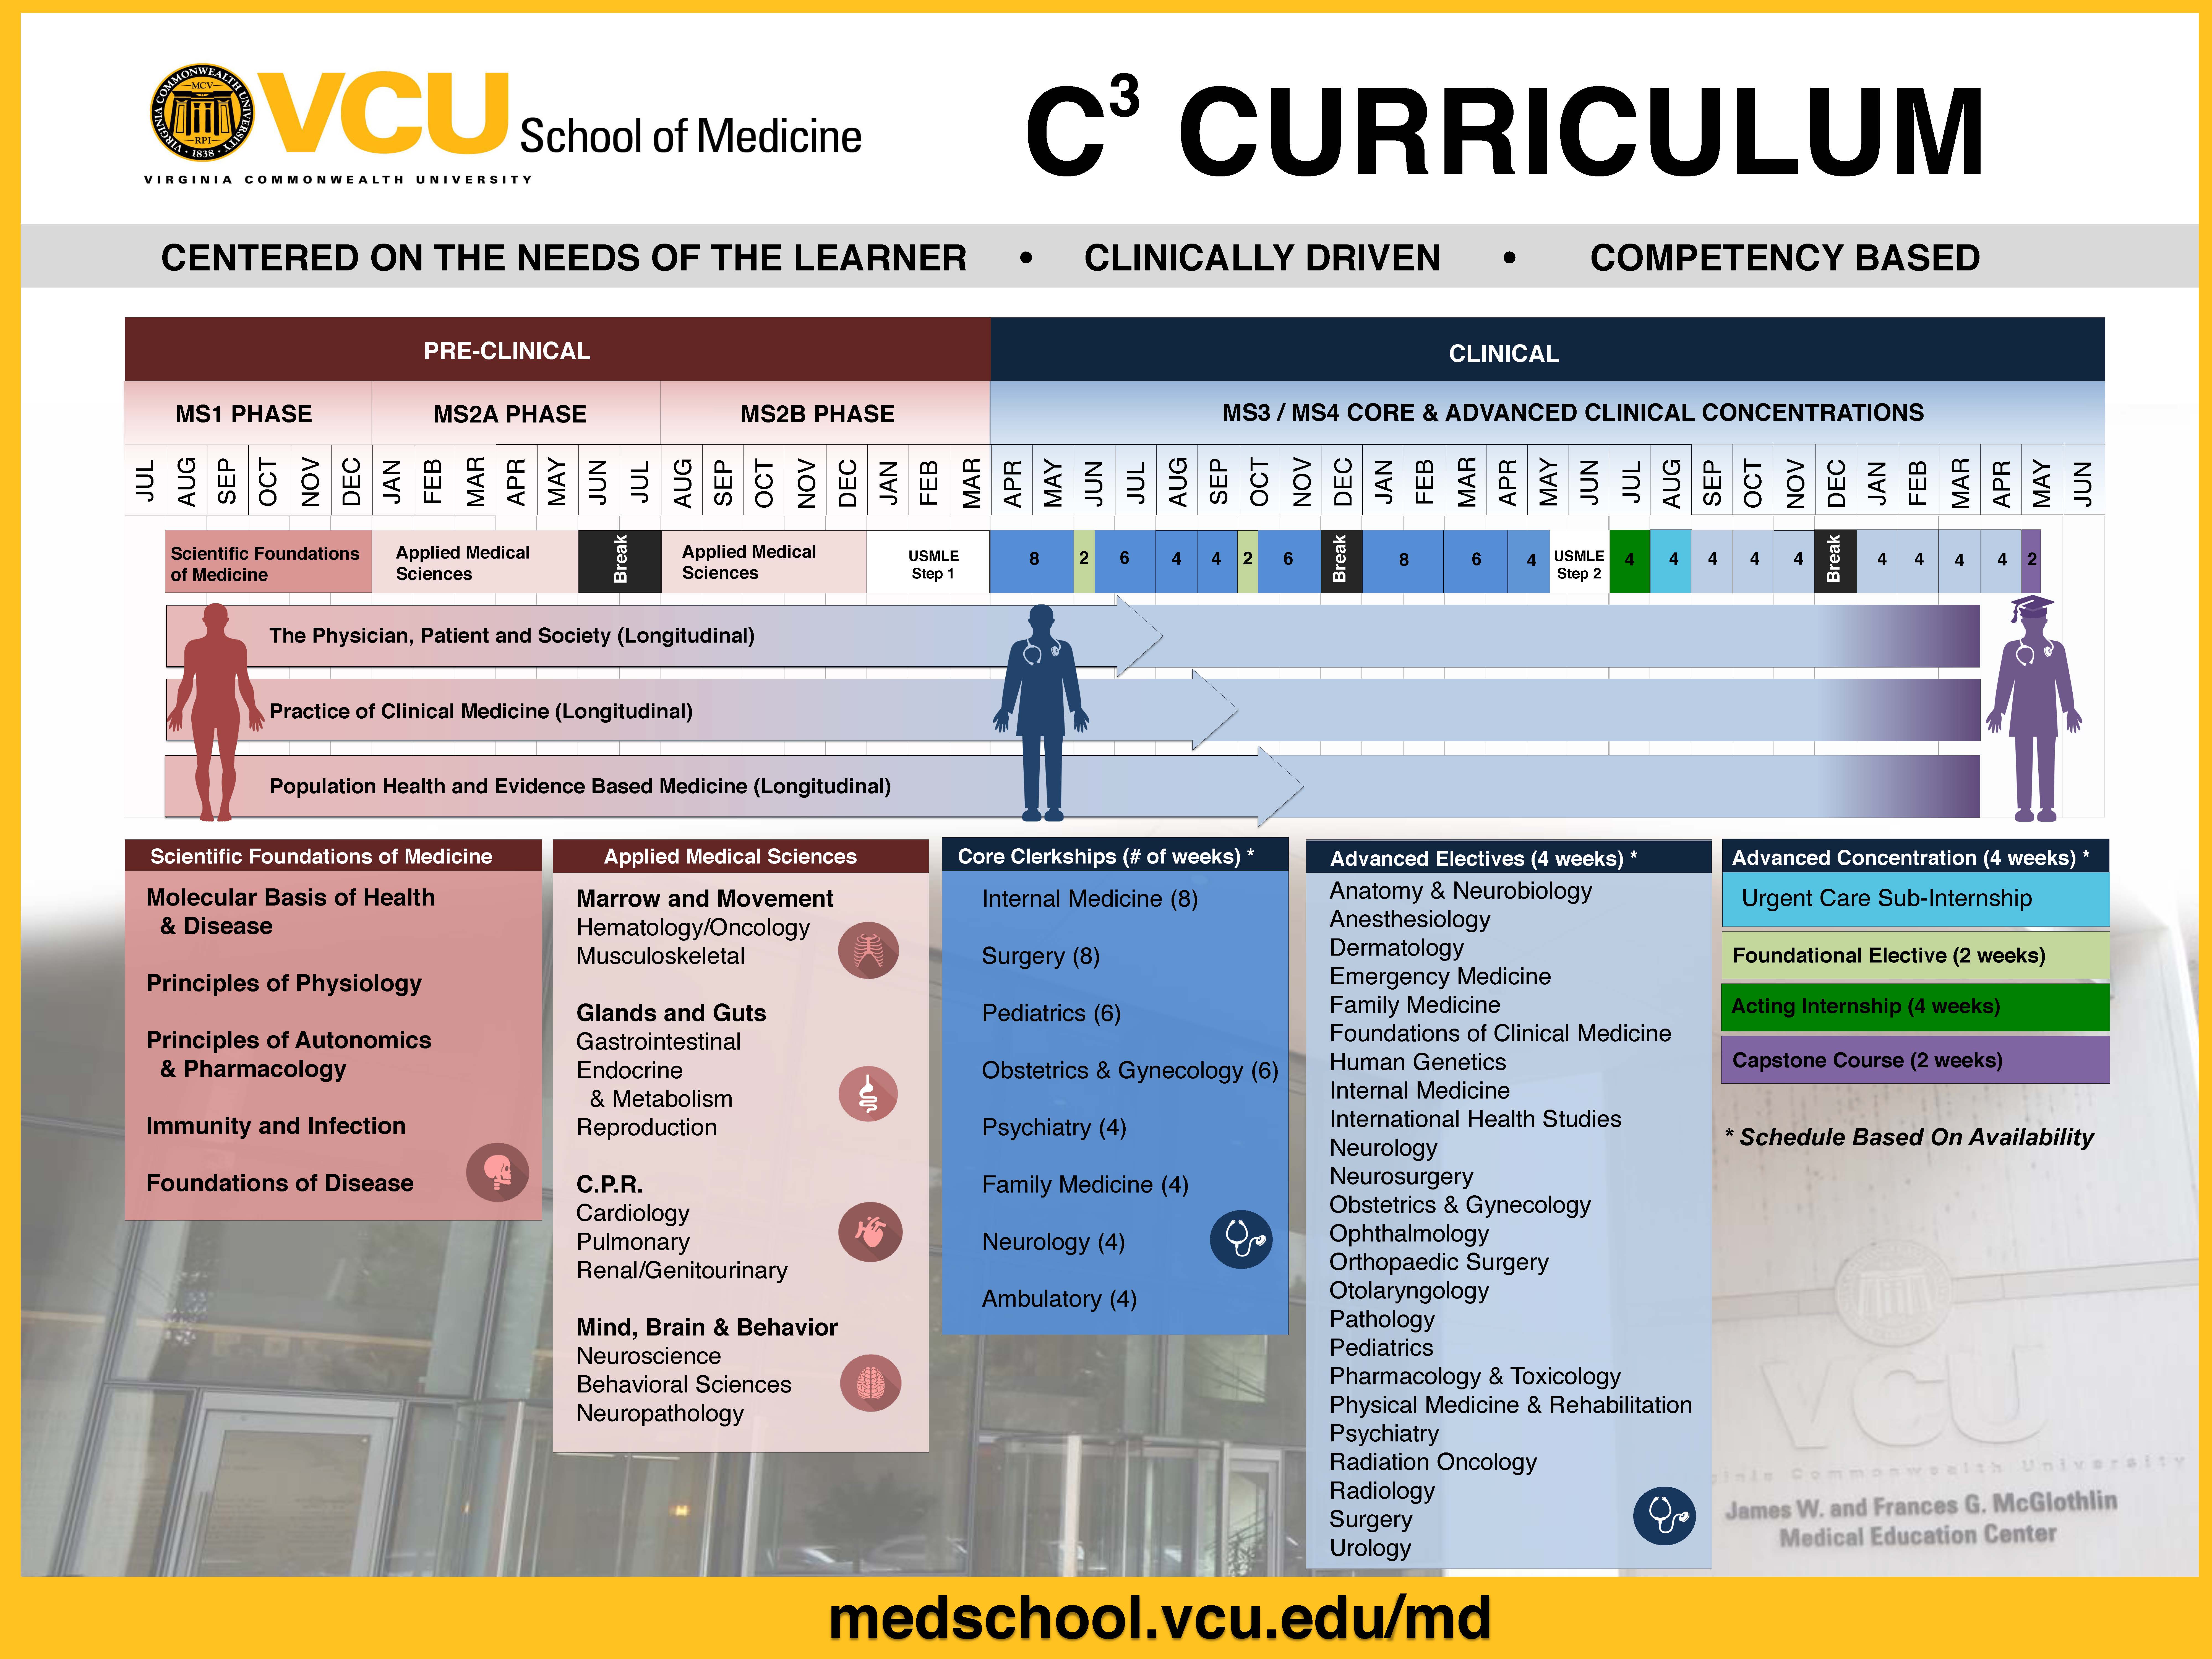 VCU School of Medicine C3 Curriculum Overview